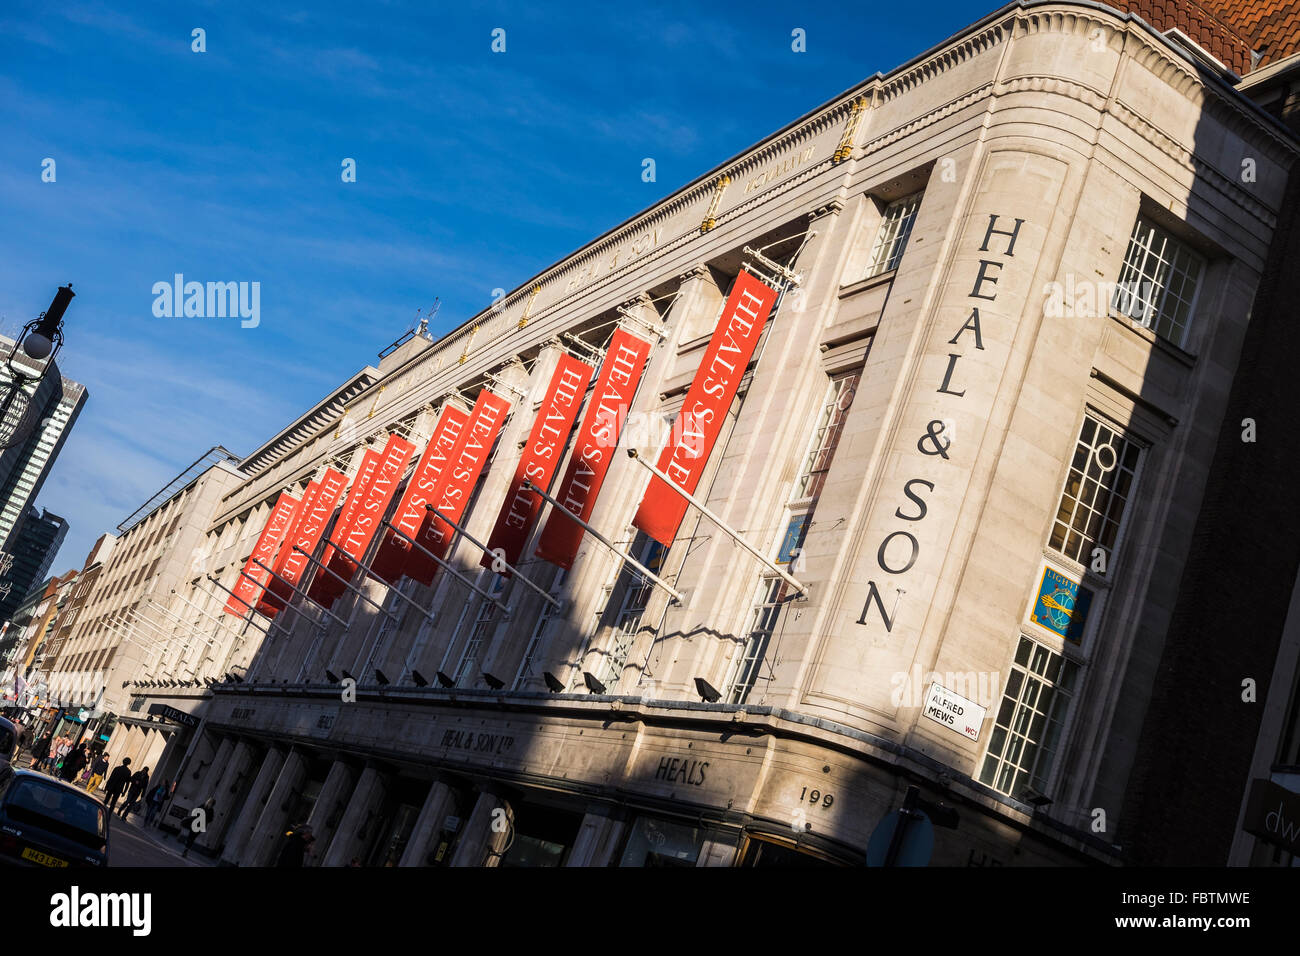 Heal&Son store, Tottenham Court road, London, England, U.K. Stock Photo